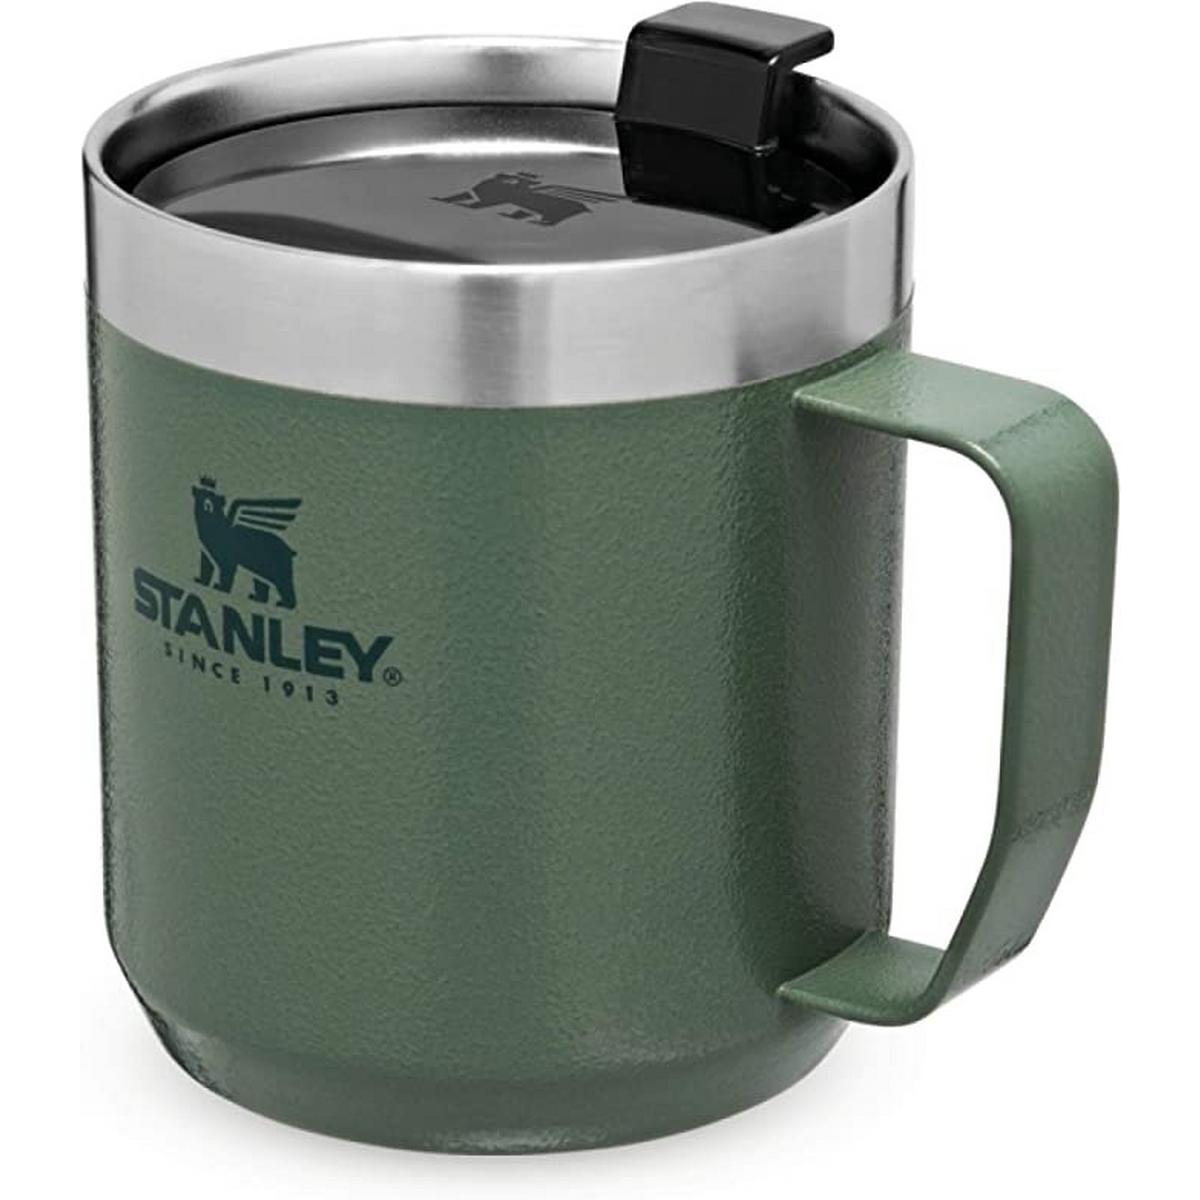 Stanley Legendary Camp Mug (350ml) - Hammertone Green